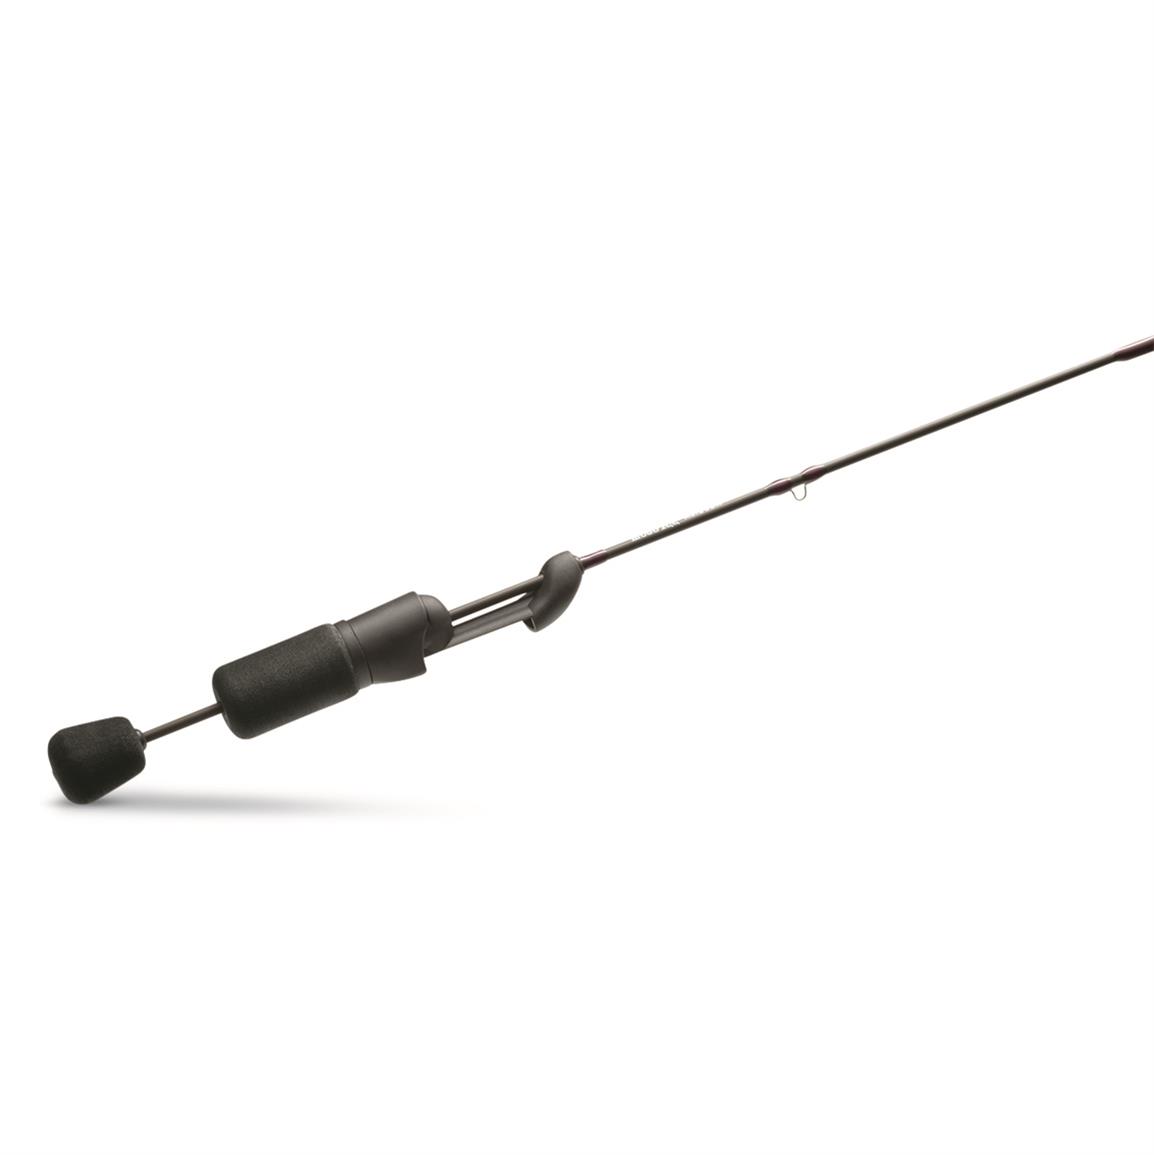 St. Croix Mojo Series Ice Fishing Rod, 24, Medium Power - 723863